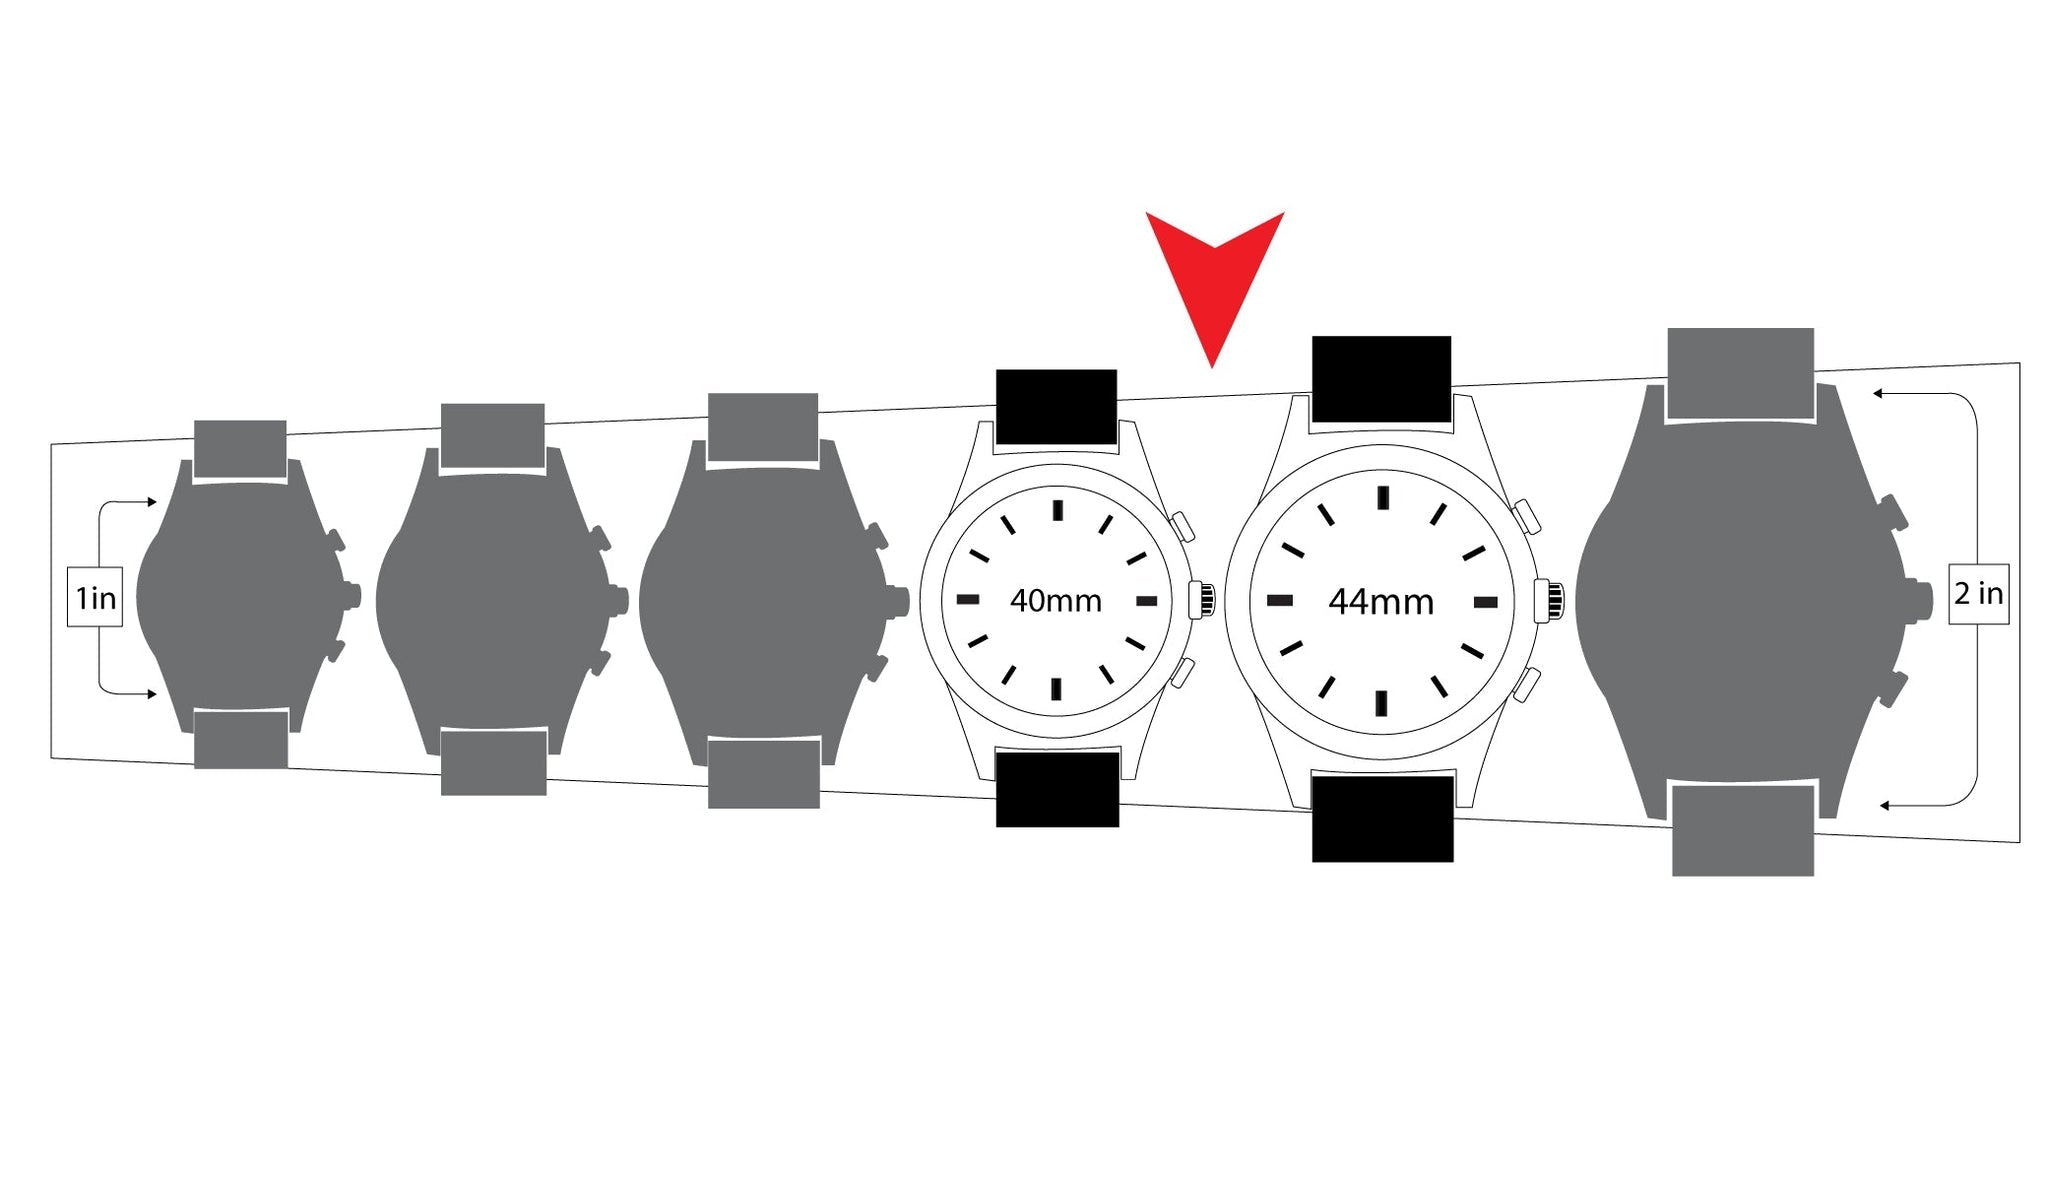 Bauhaus 2140-4 Men's Watch Swiss Movement with Date display